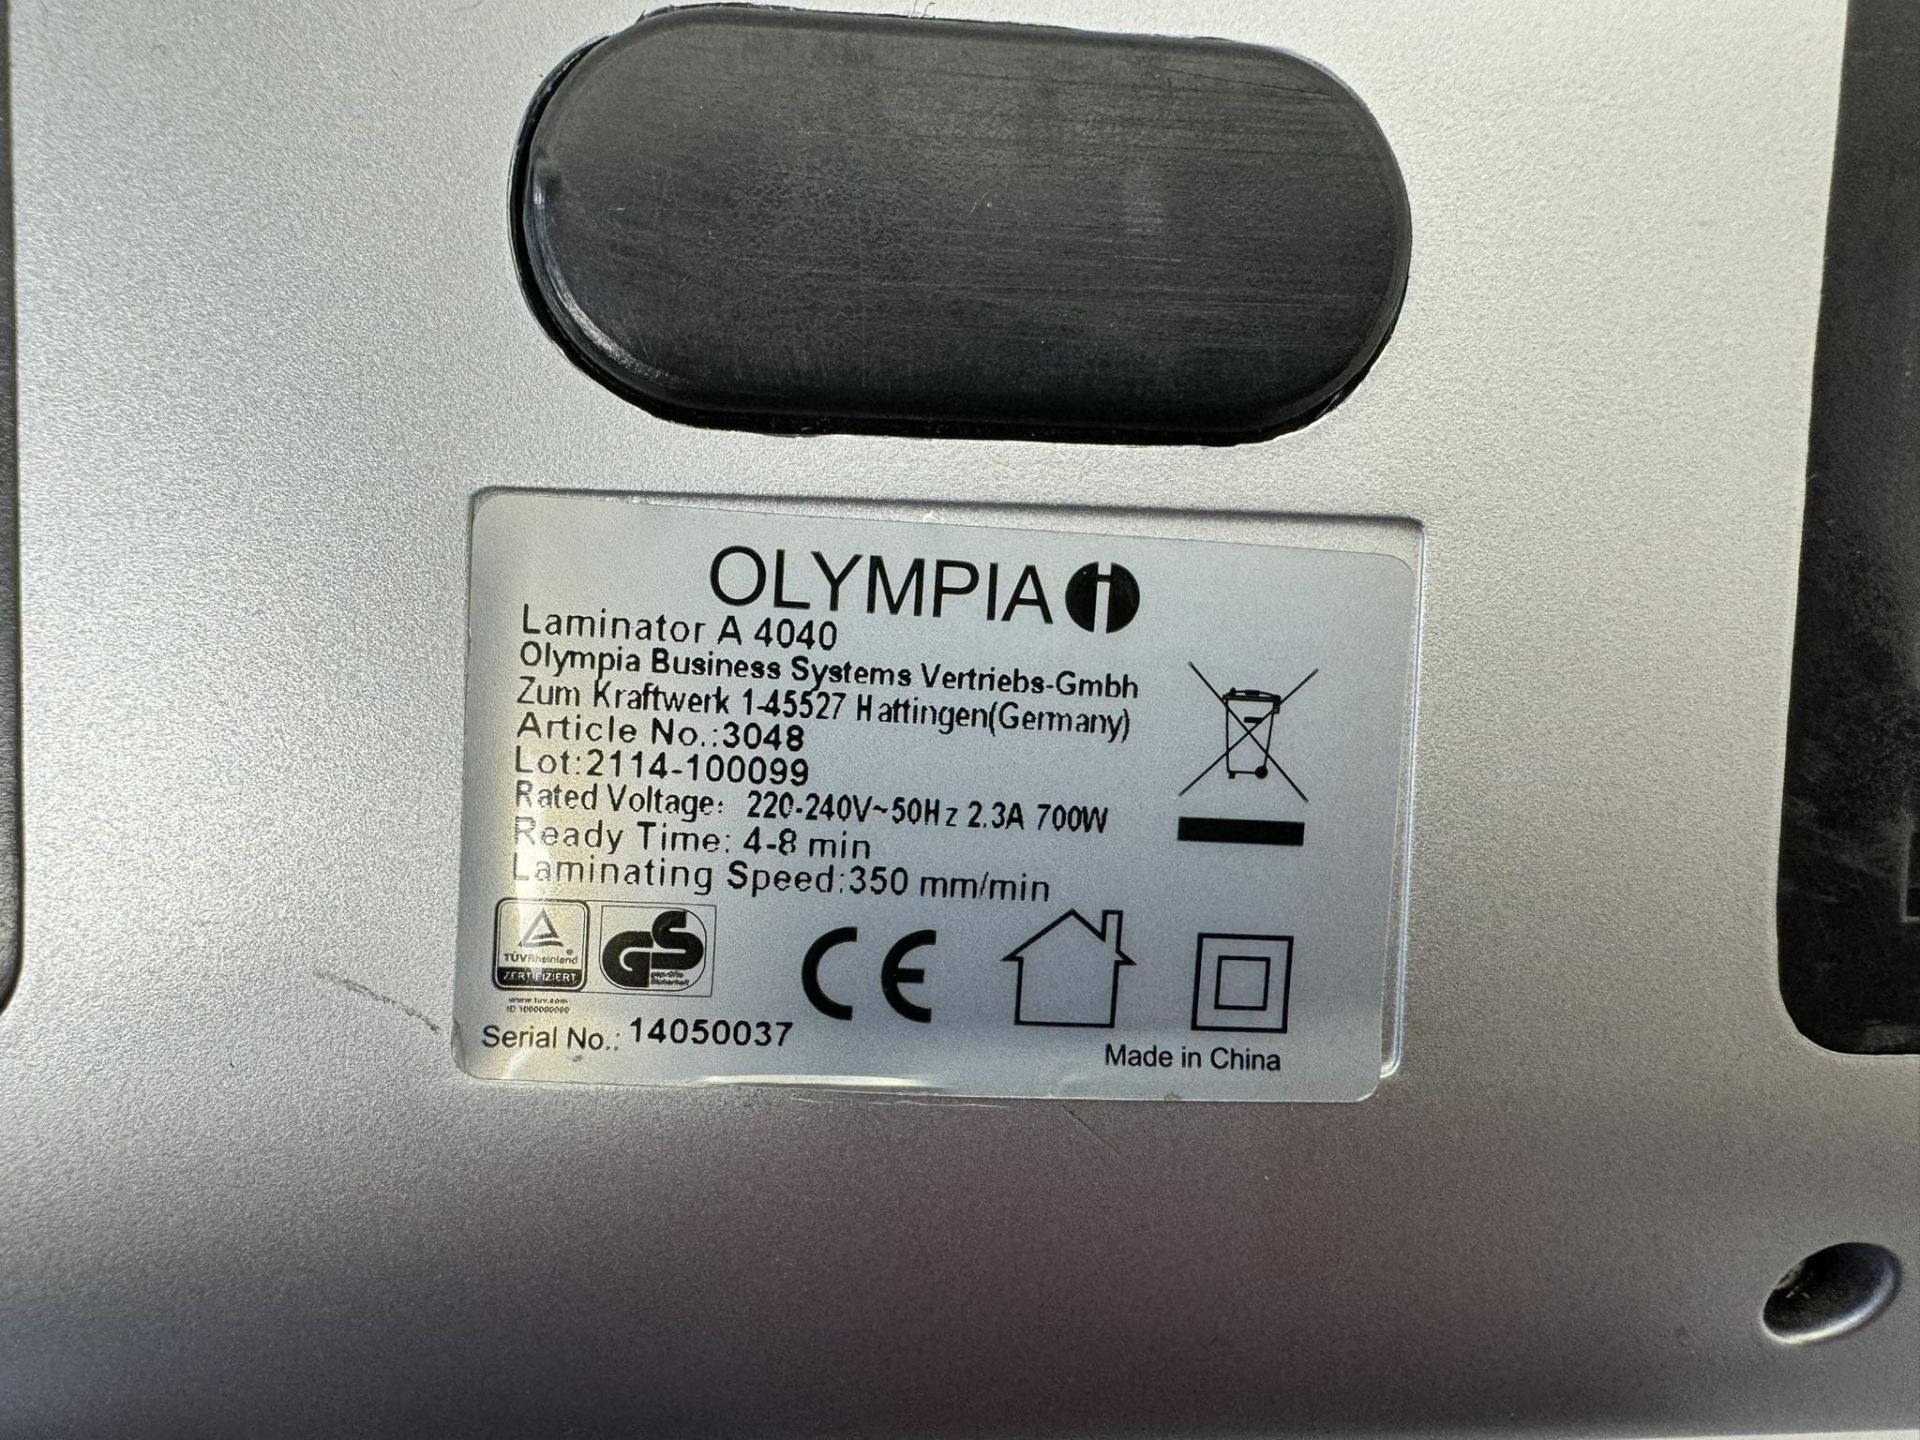 Olympia A 4040 Laminator - Image 4 of 4